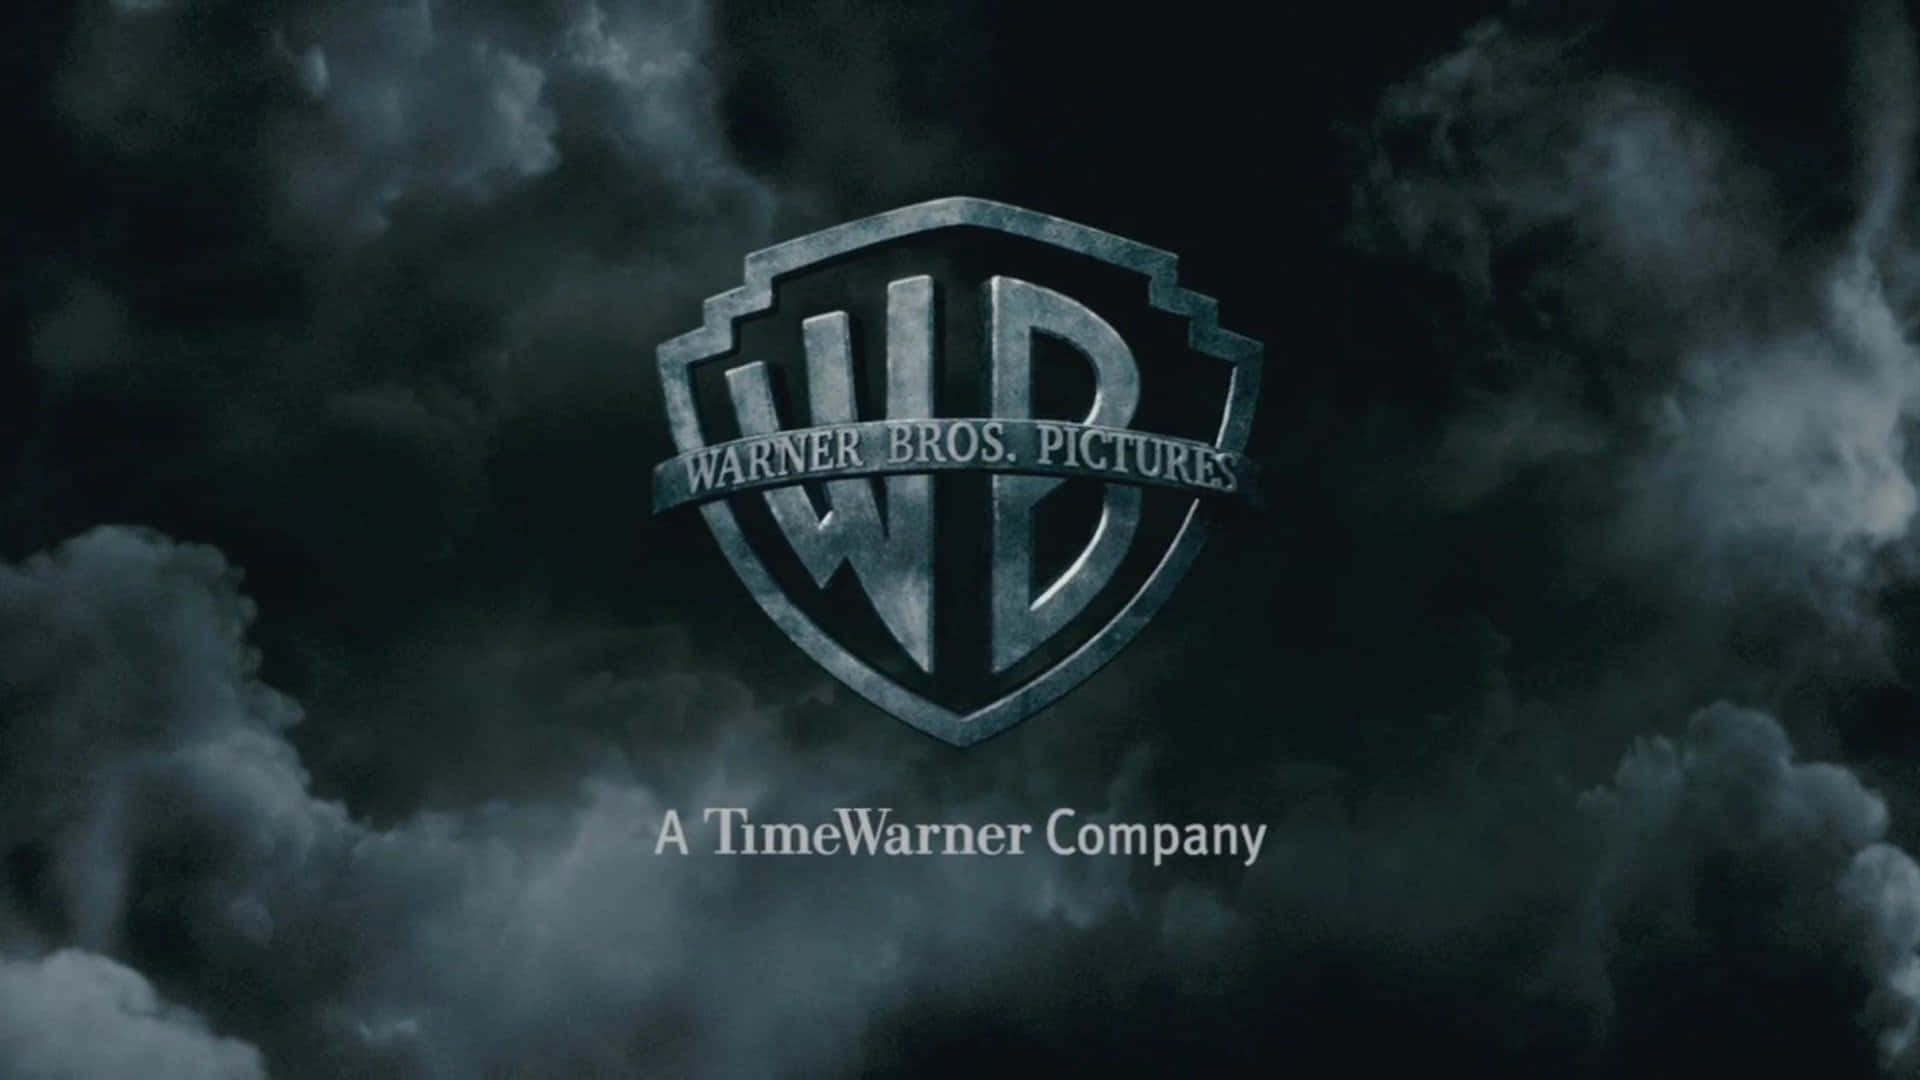 Iconic Warner Bros Logo in a Sparkling Night Sky